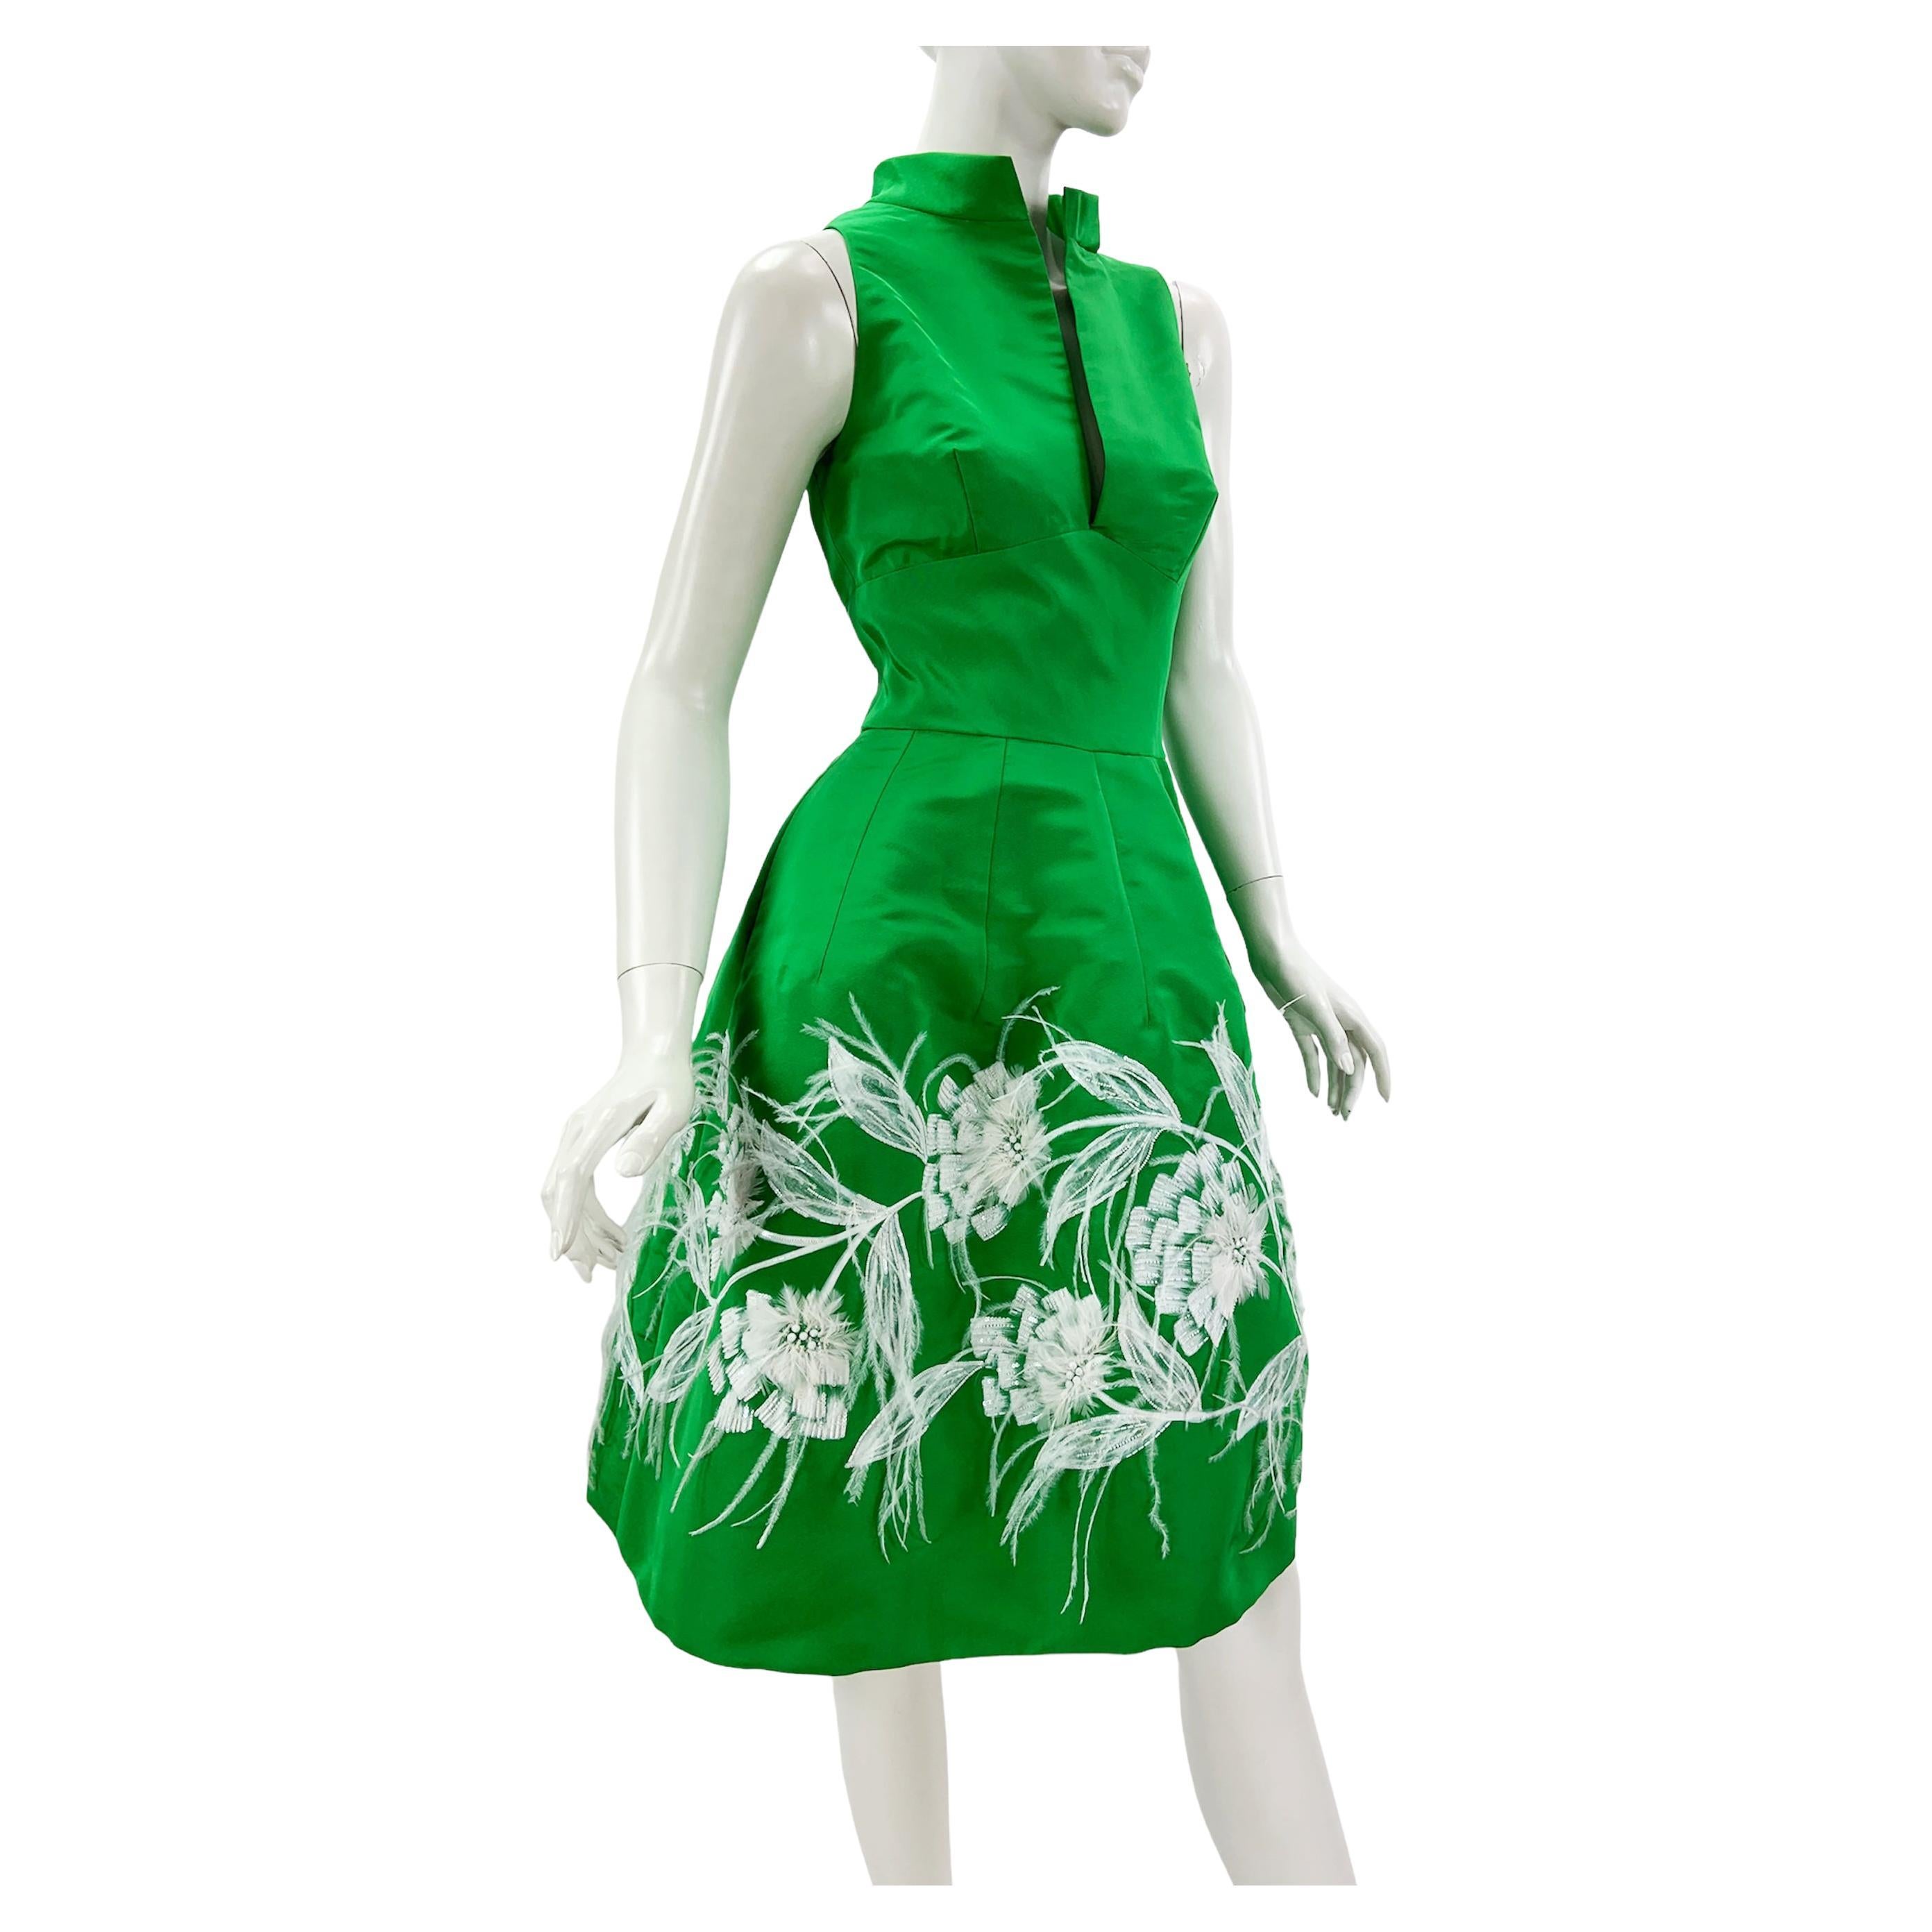 NWT Oscar de la Renta $5490 S/S 2015 Green Silk Taffeta Feather Beads Dress US 6 For Sale